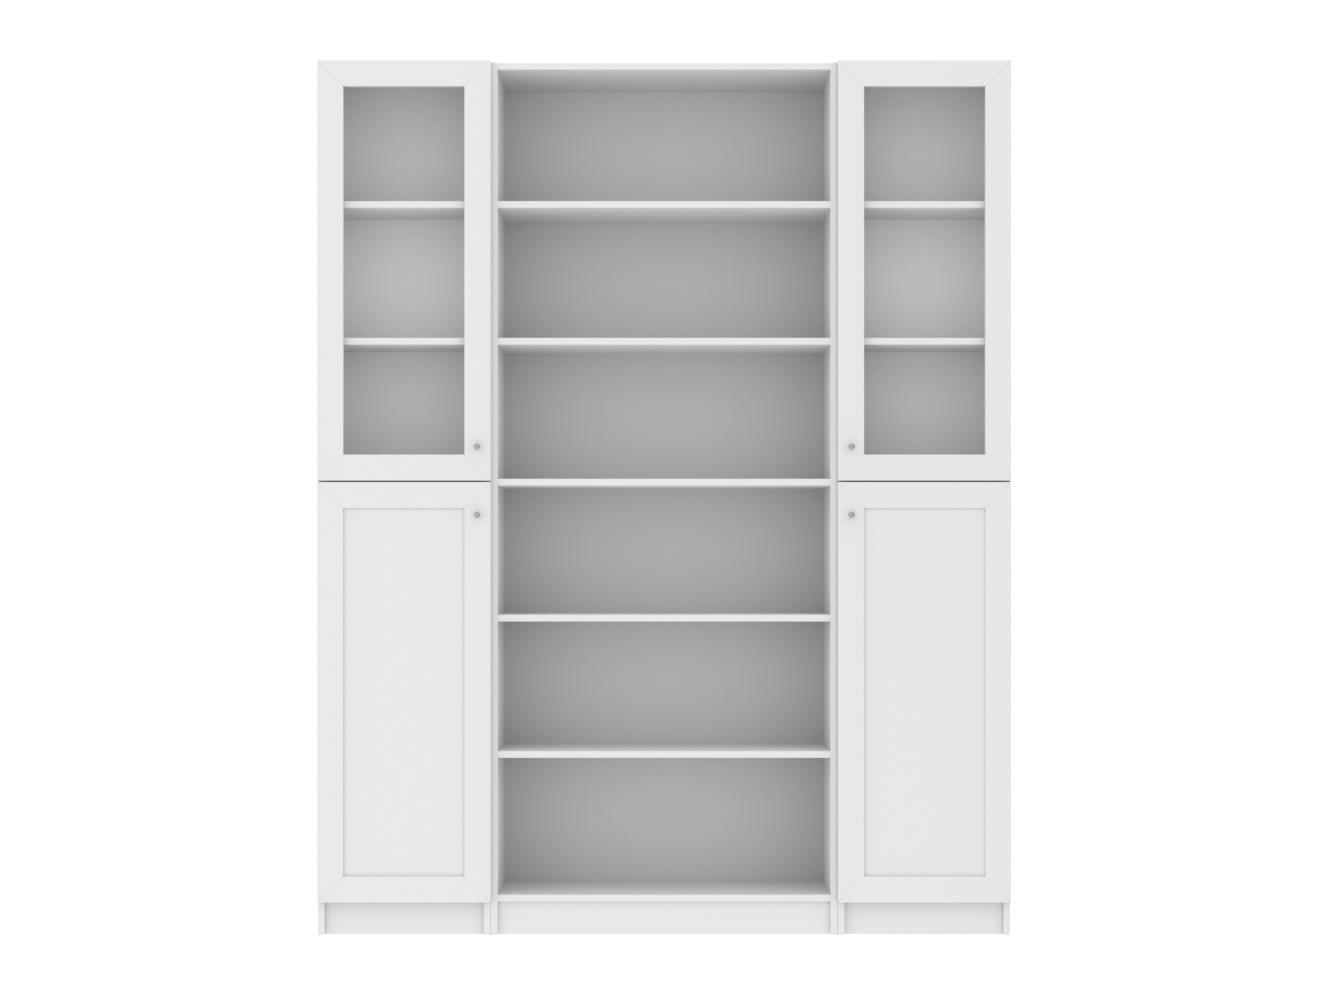  Книжный шкаф Билли 421 white ИКЕА (IKEA) изображение товара